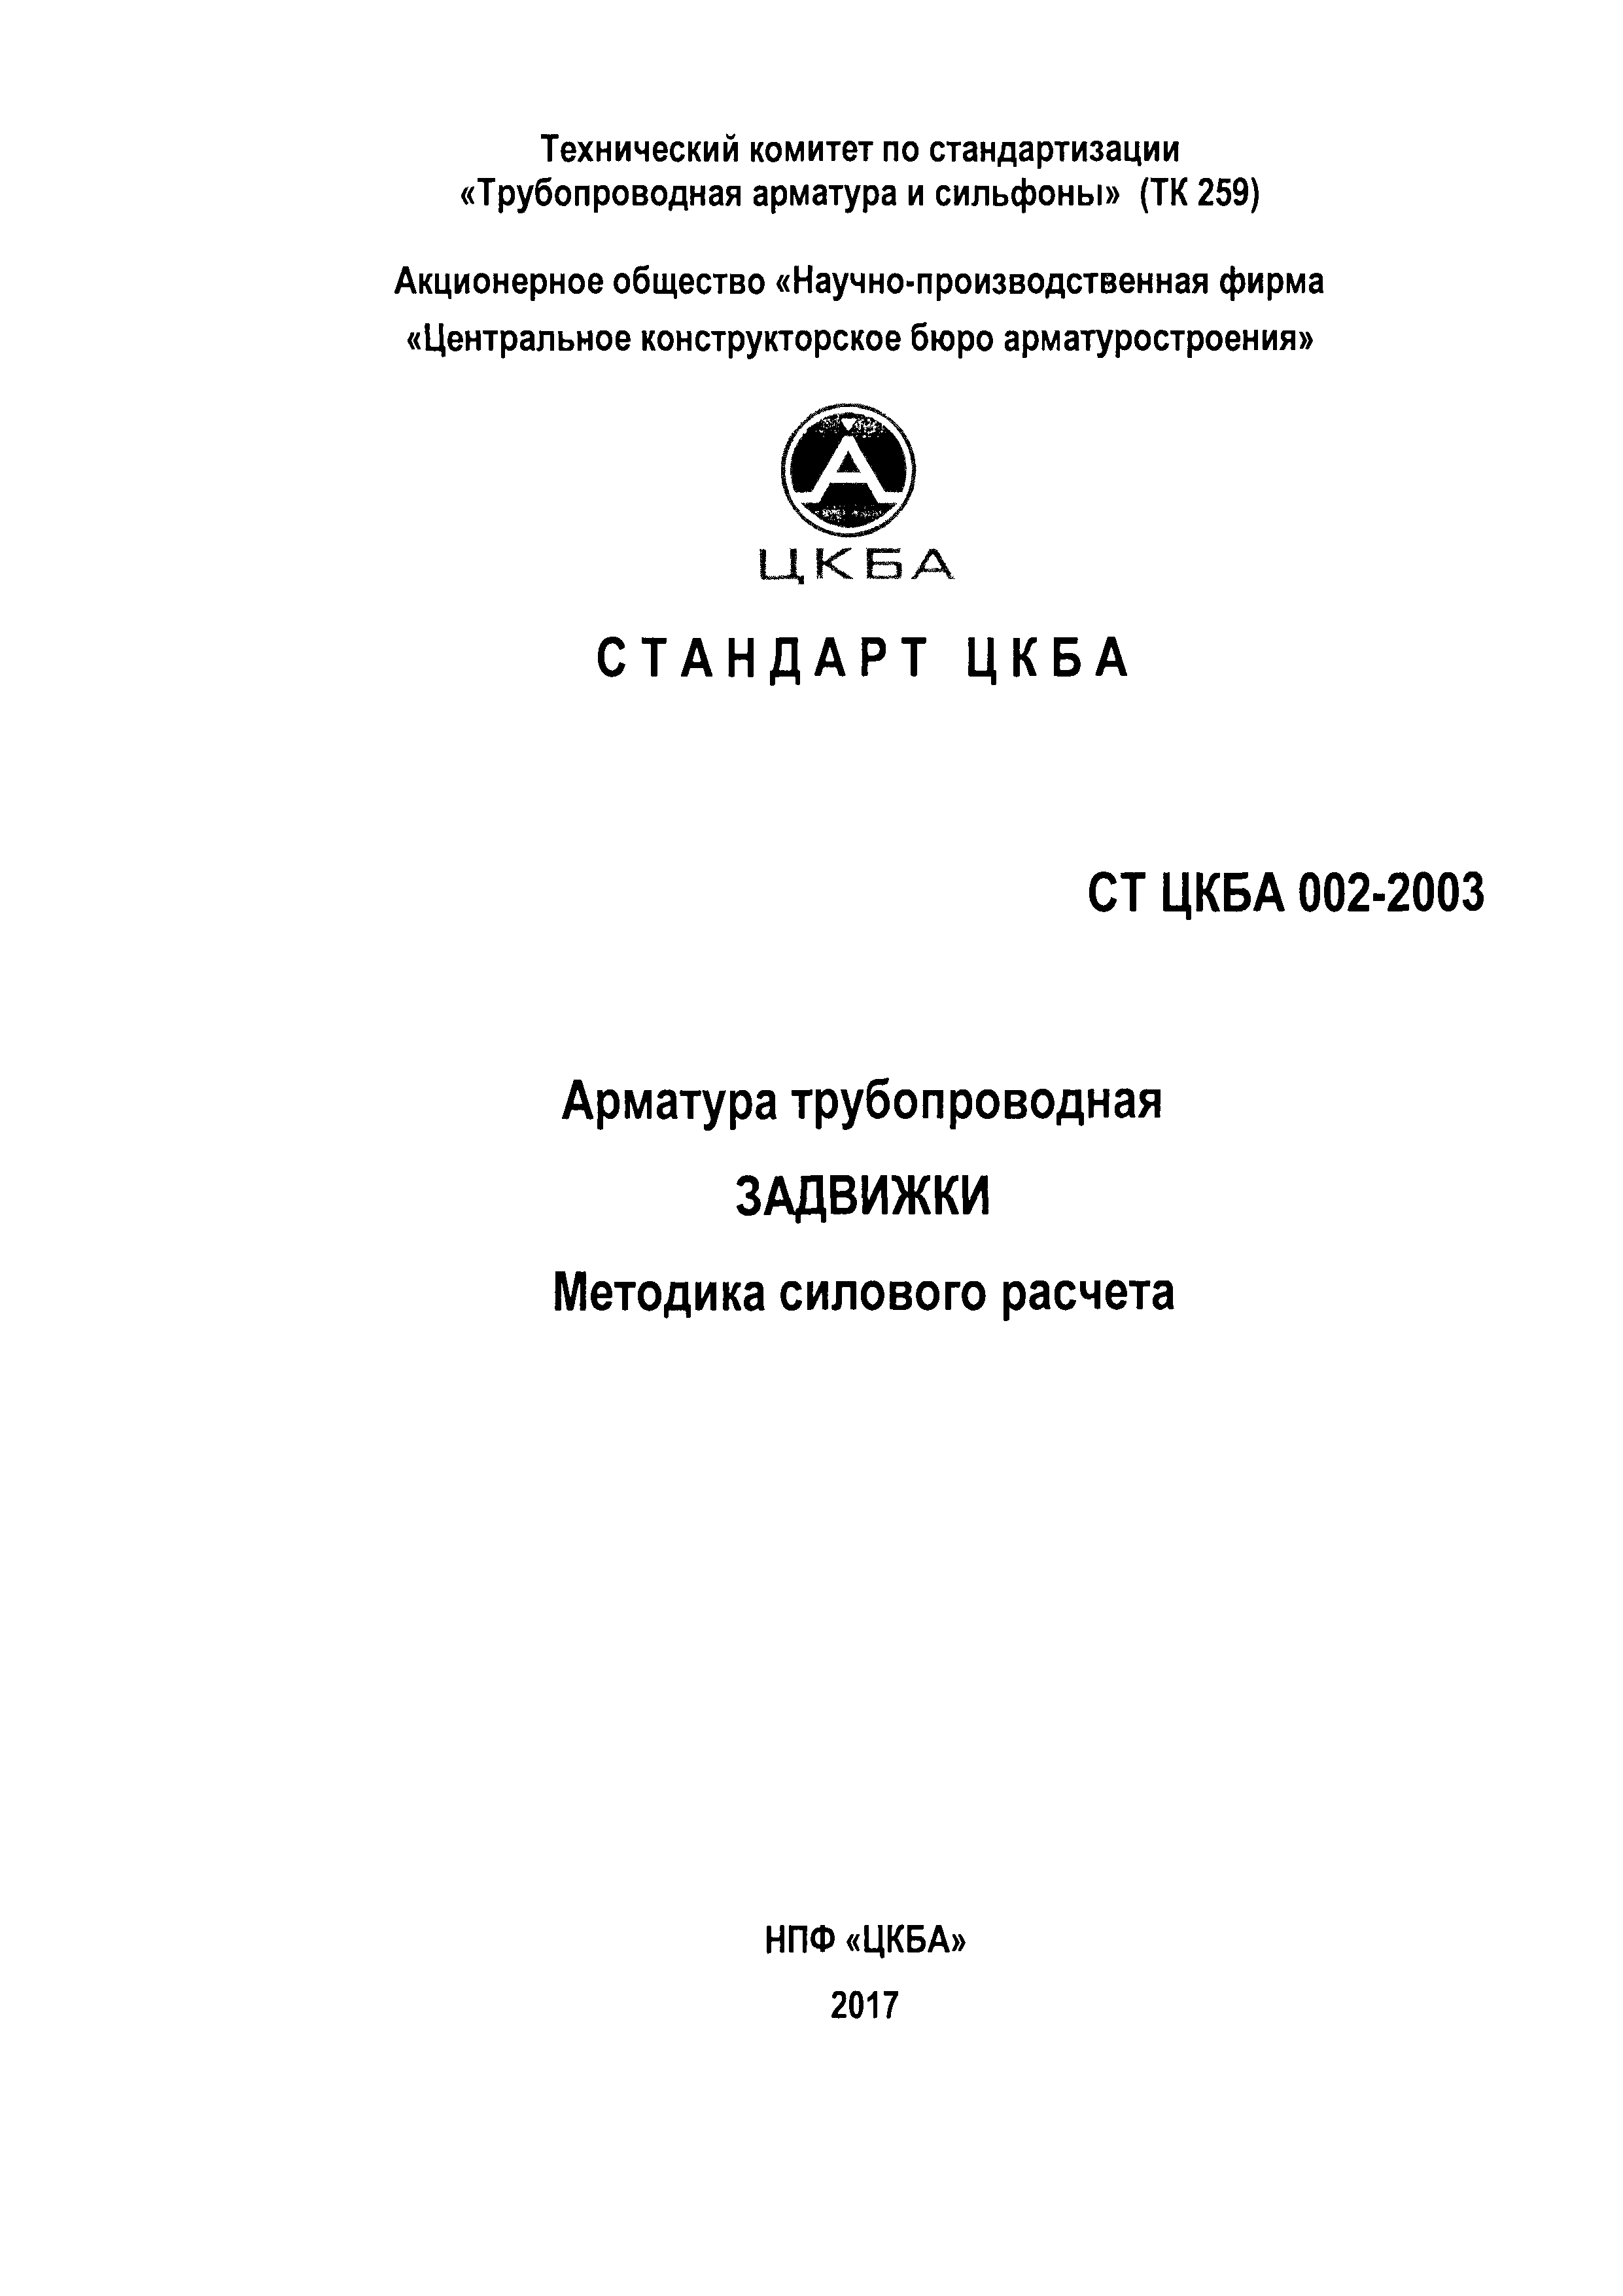 СТ ЦКБА 002-2003